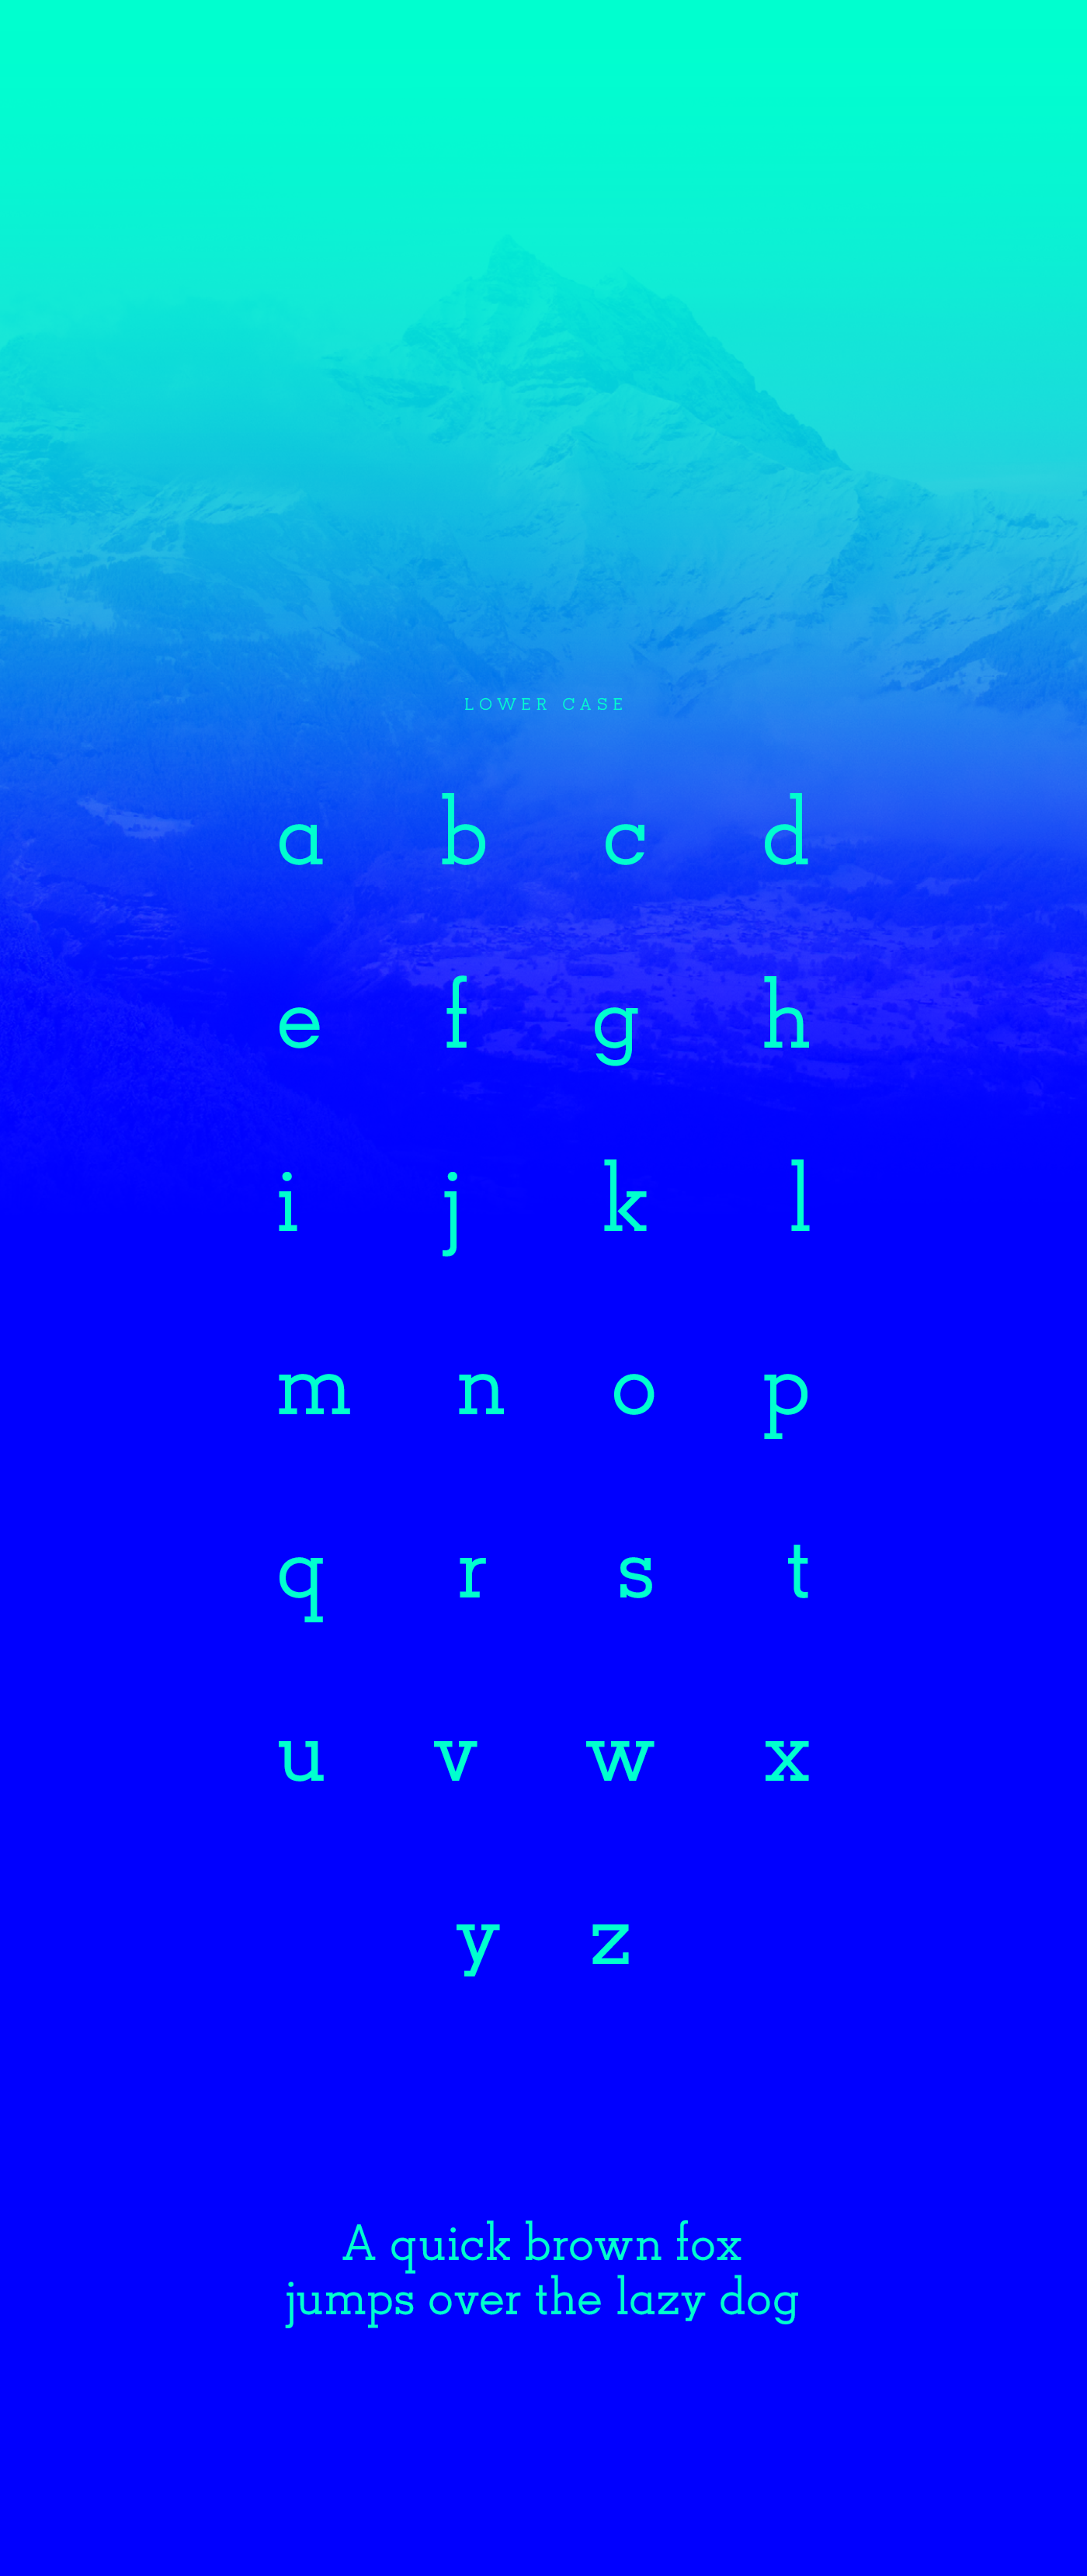 Piriquita Free Font - serif